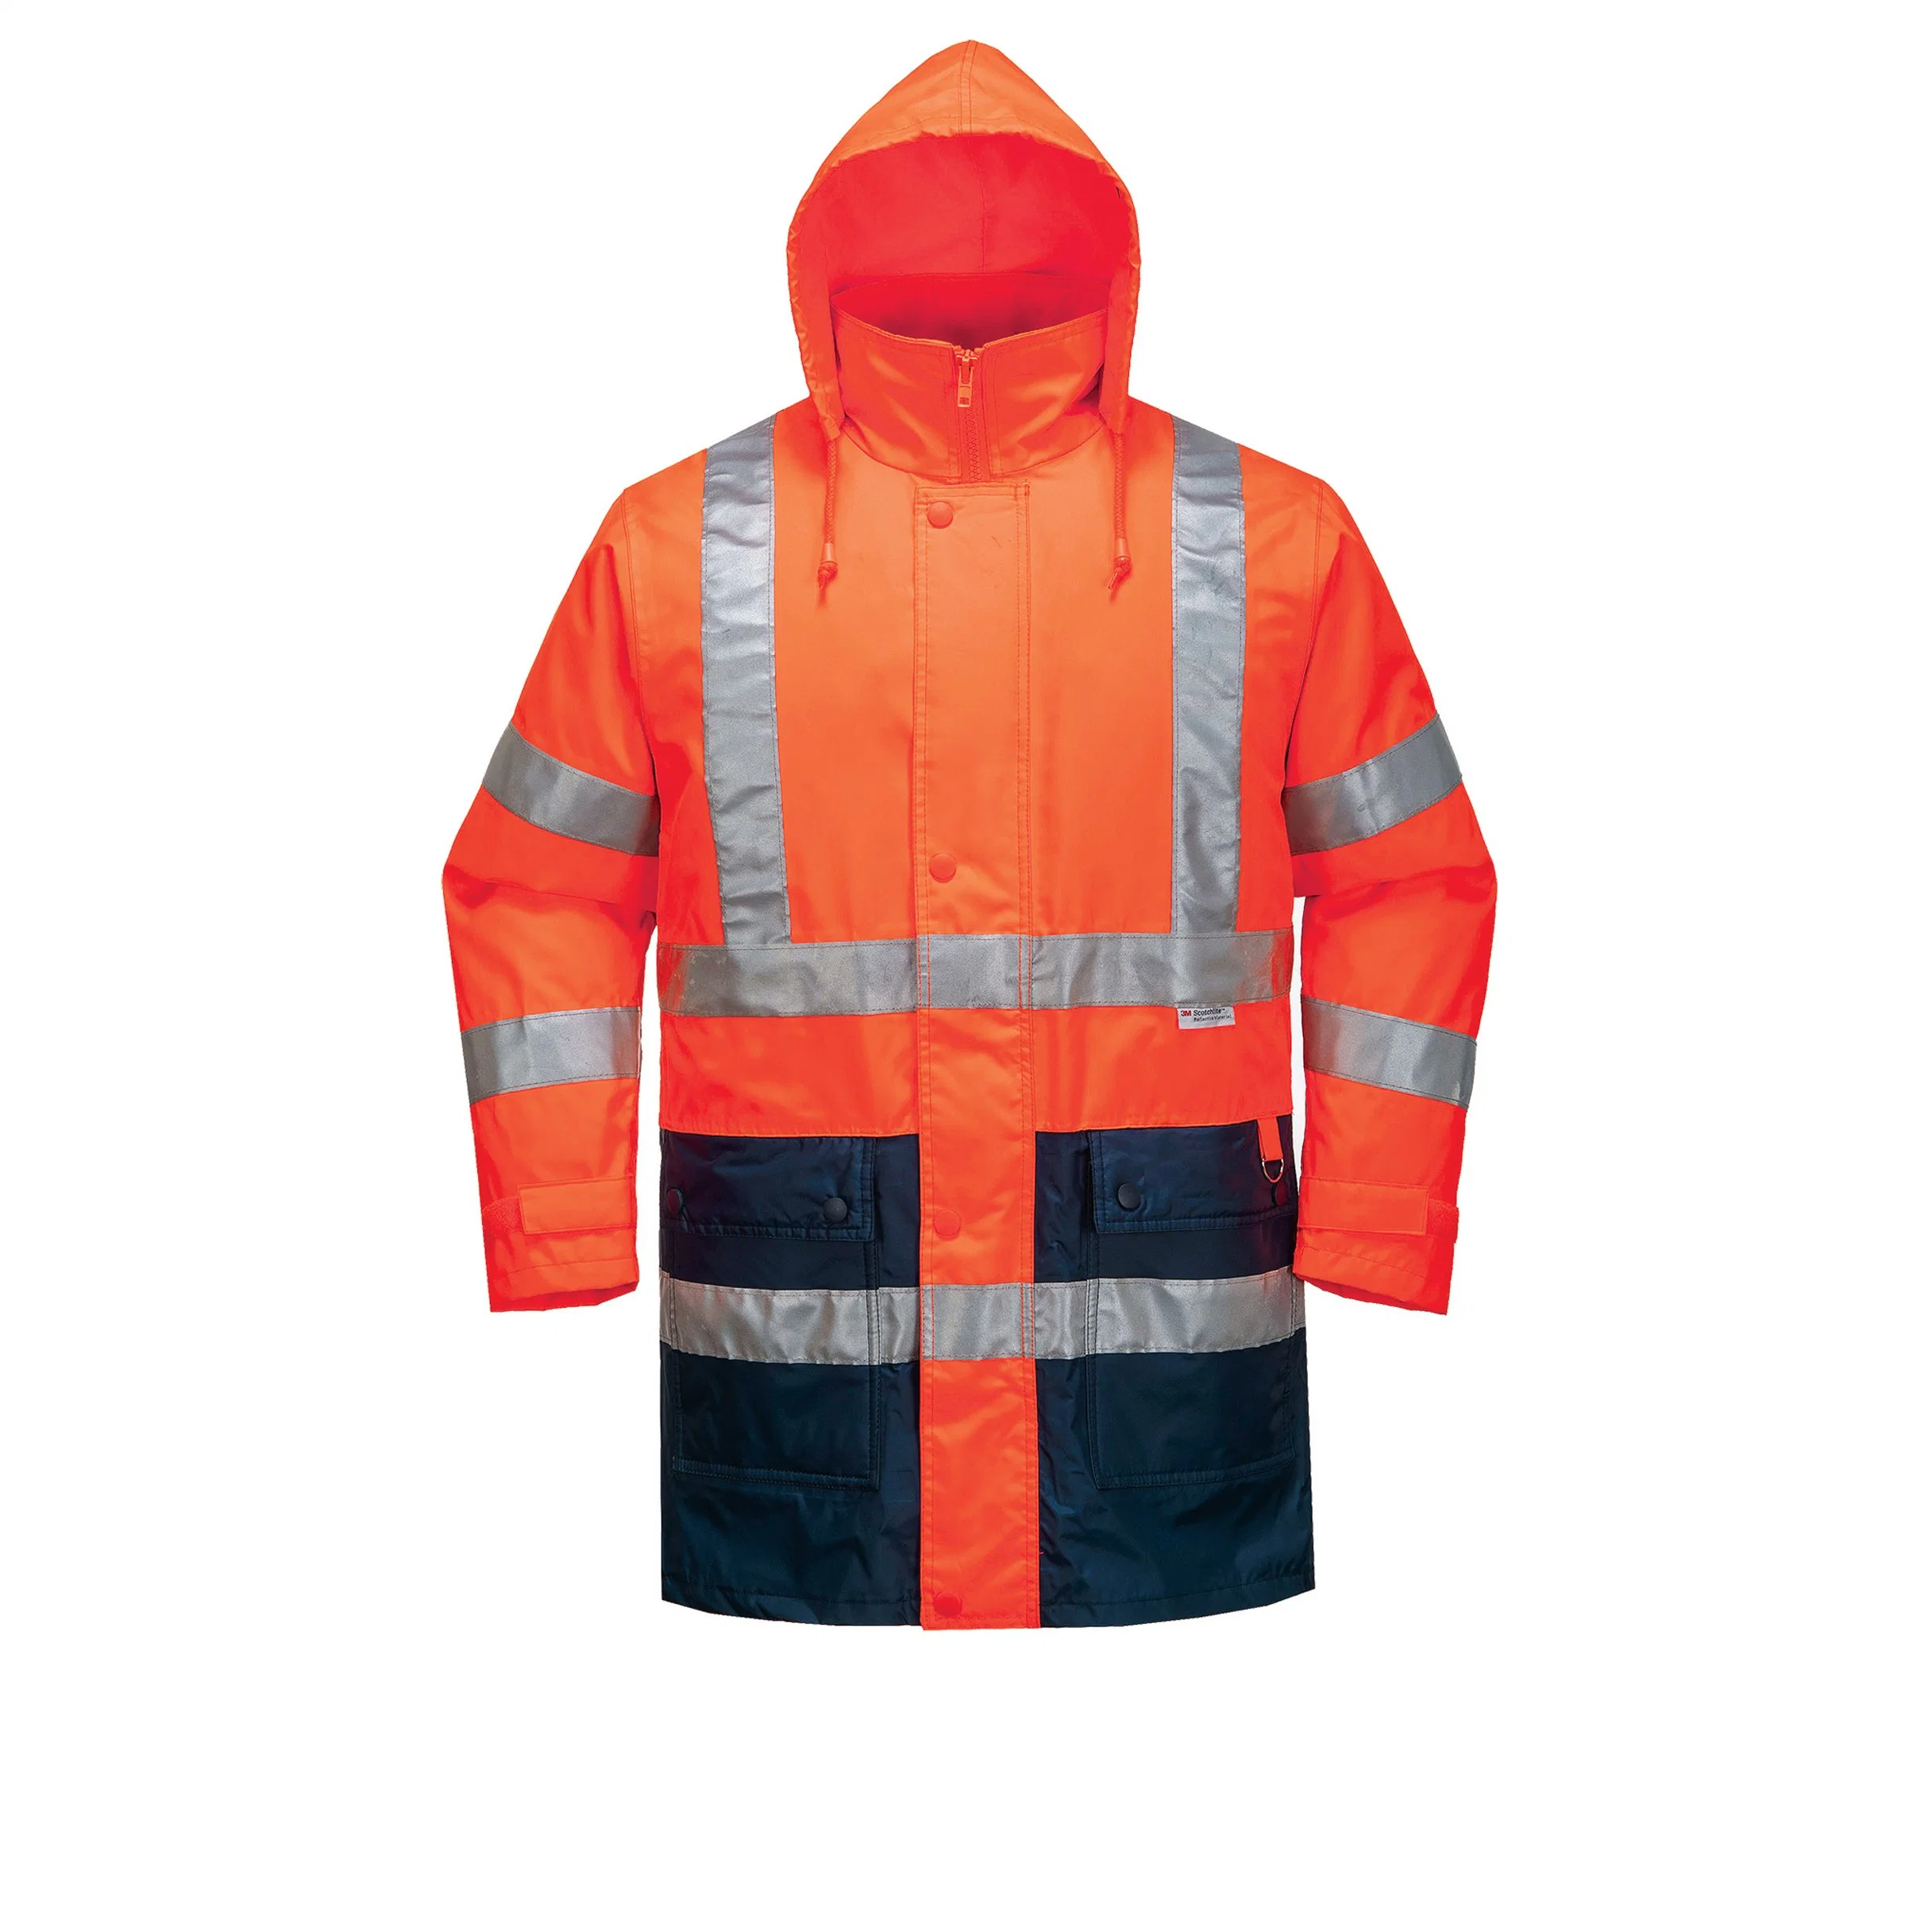 High Visibility Jacket & Pants Safety Workwear